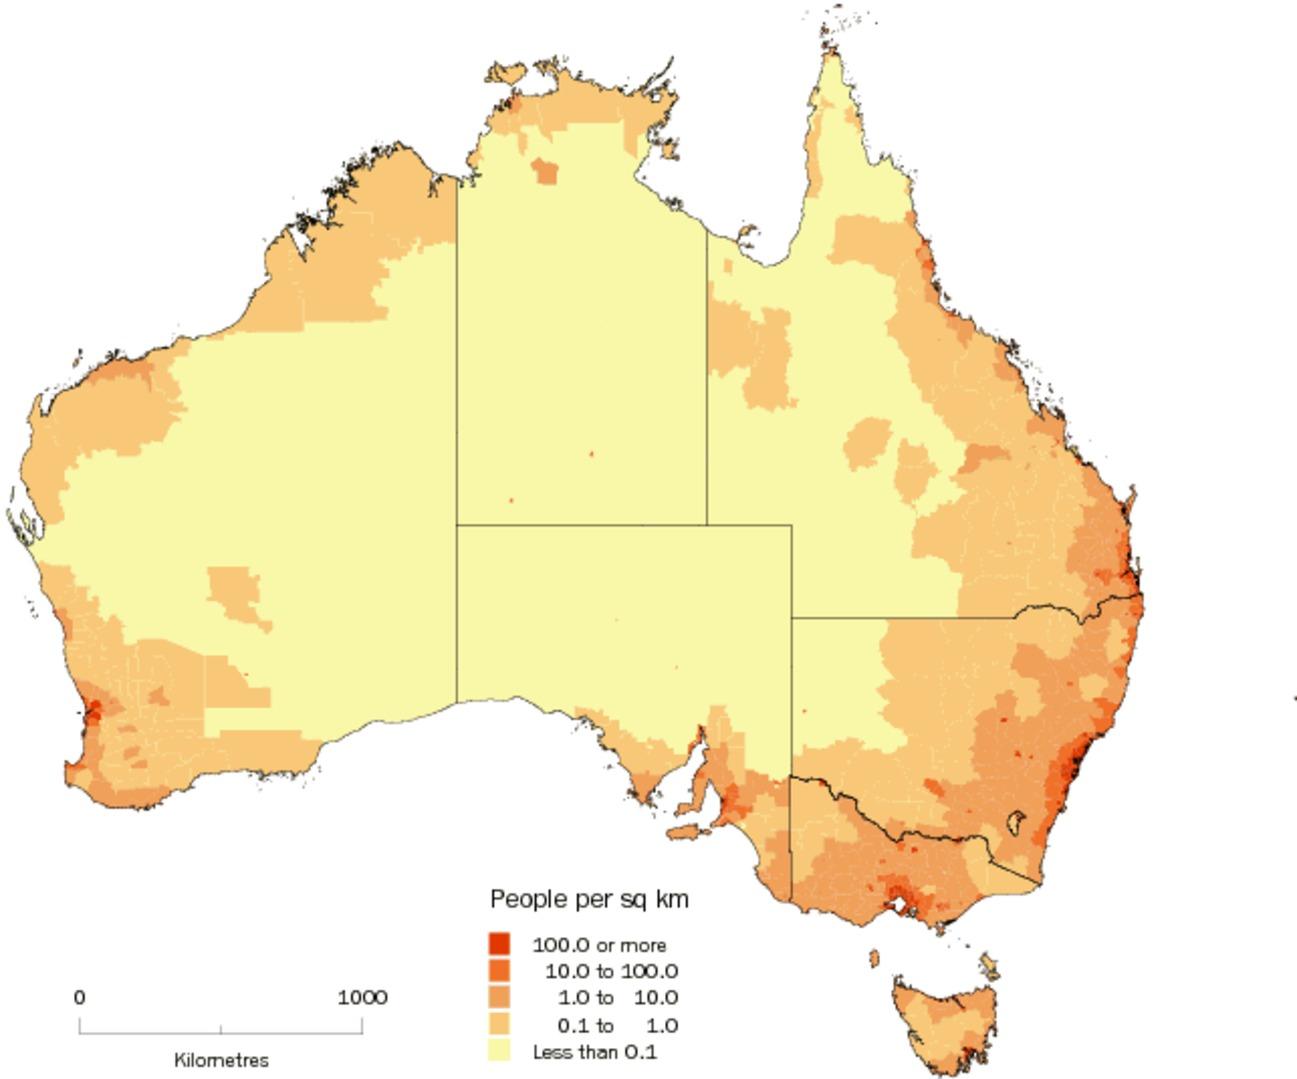 [Obrazek: mapa-australii-g%C4%99sto%C5%9B%C4%87-zaludnienia.jpg]